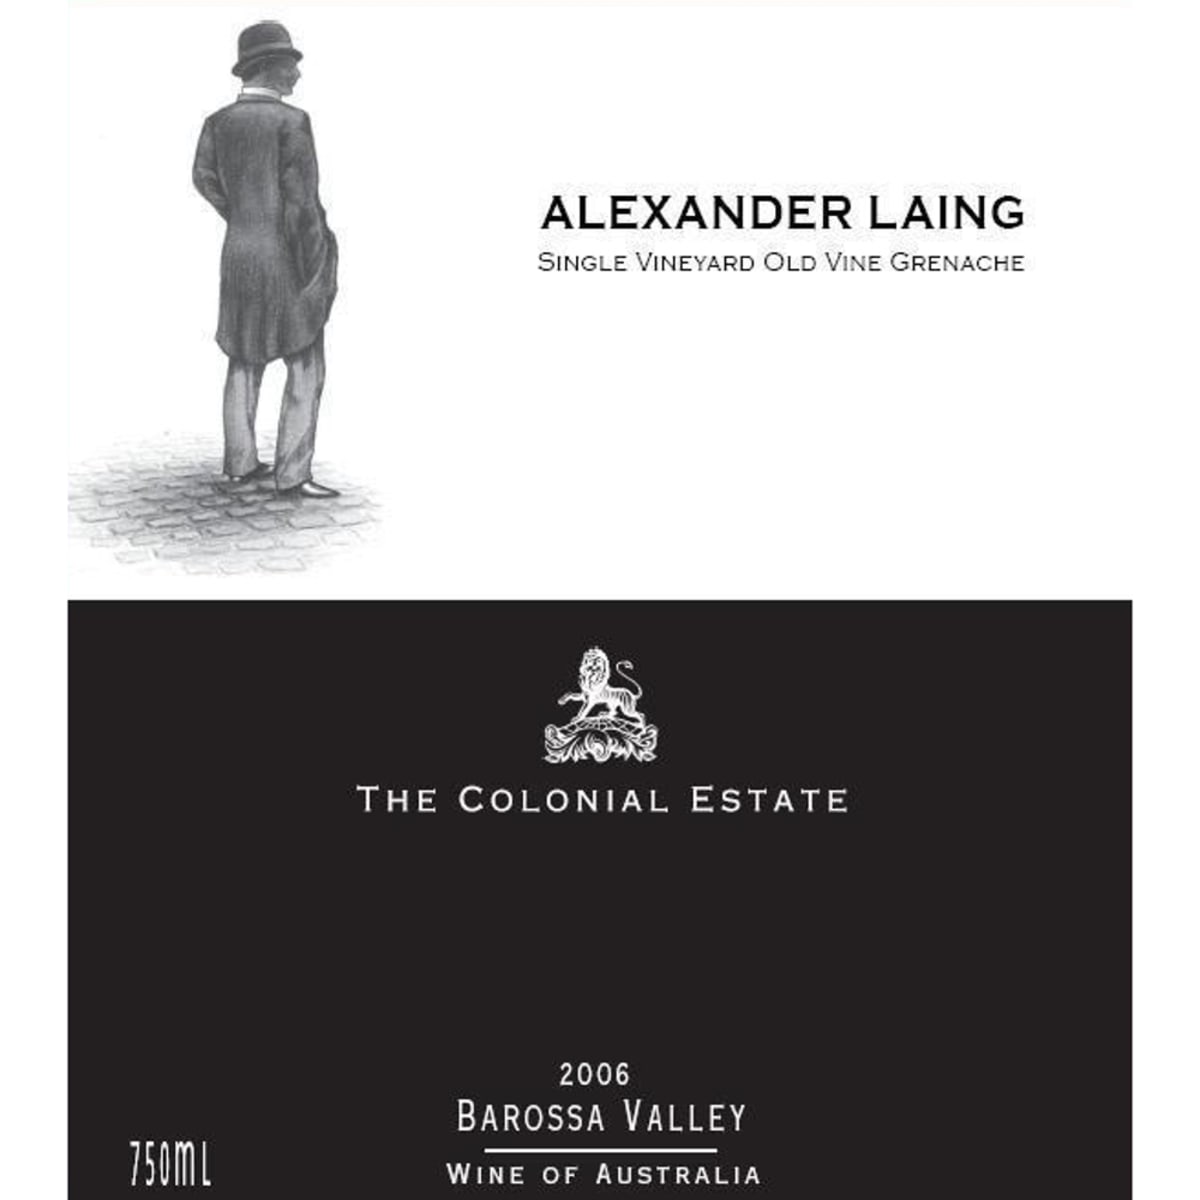 The Colonial Estate Grenache Old Vine Alexander Laing 2006 Front Label